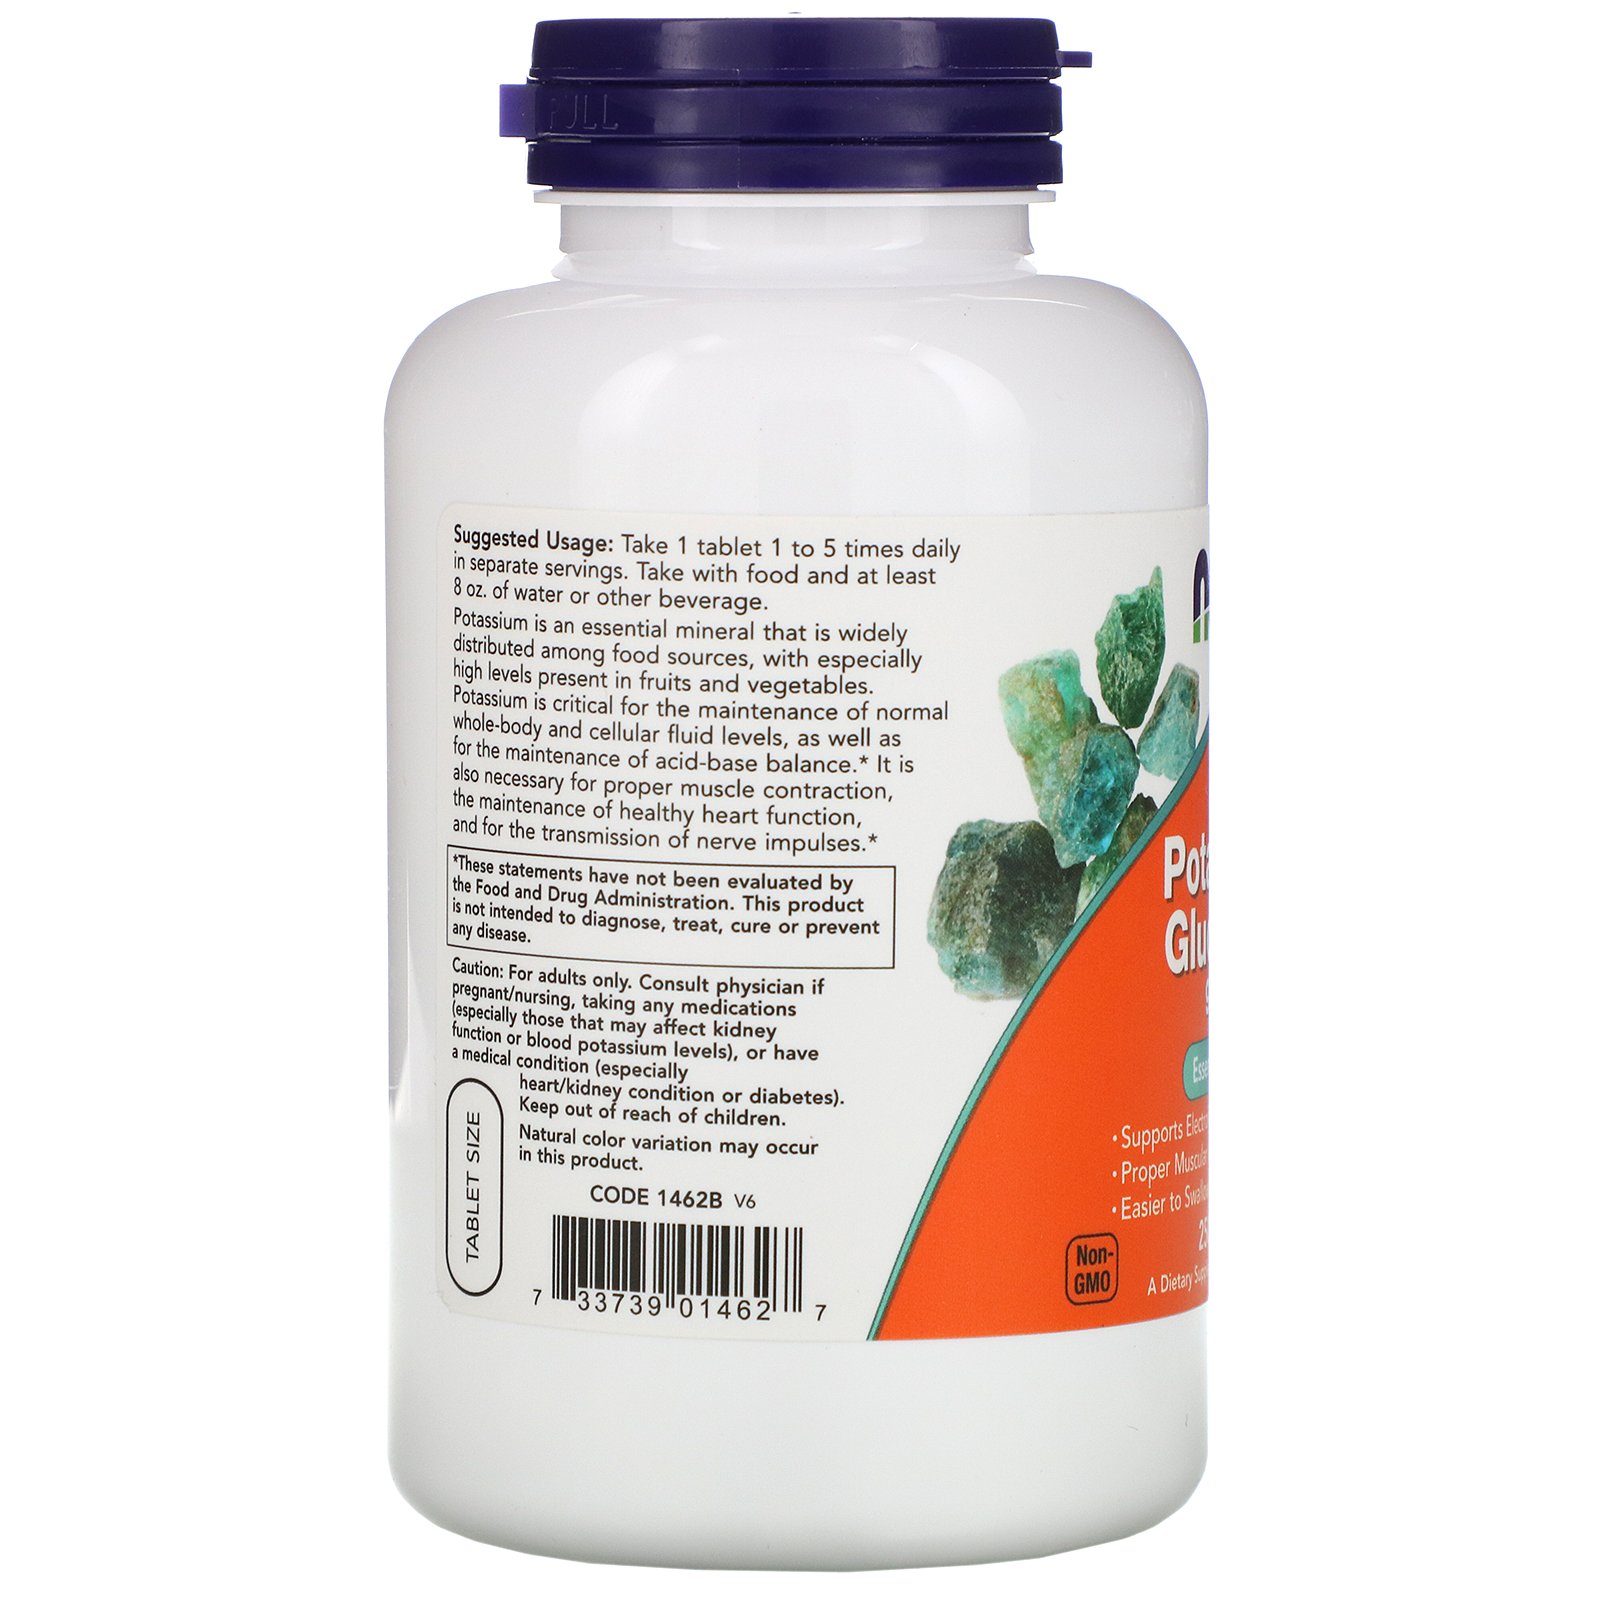 Potassium Gluconate, Калий Глюконат 99 мг - 100 таблеток